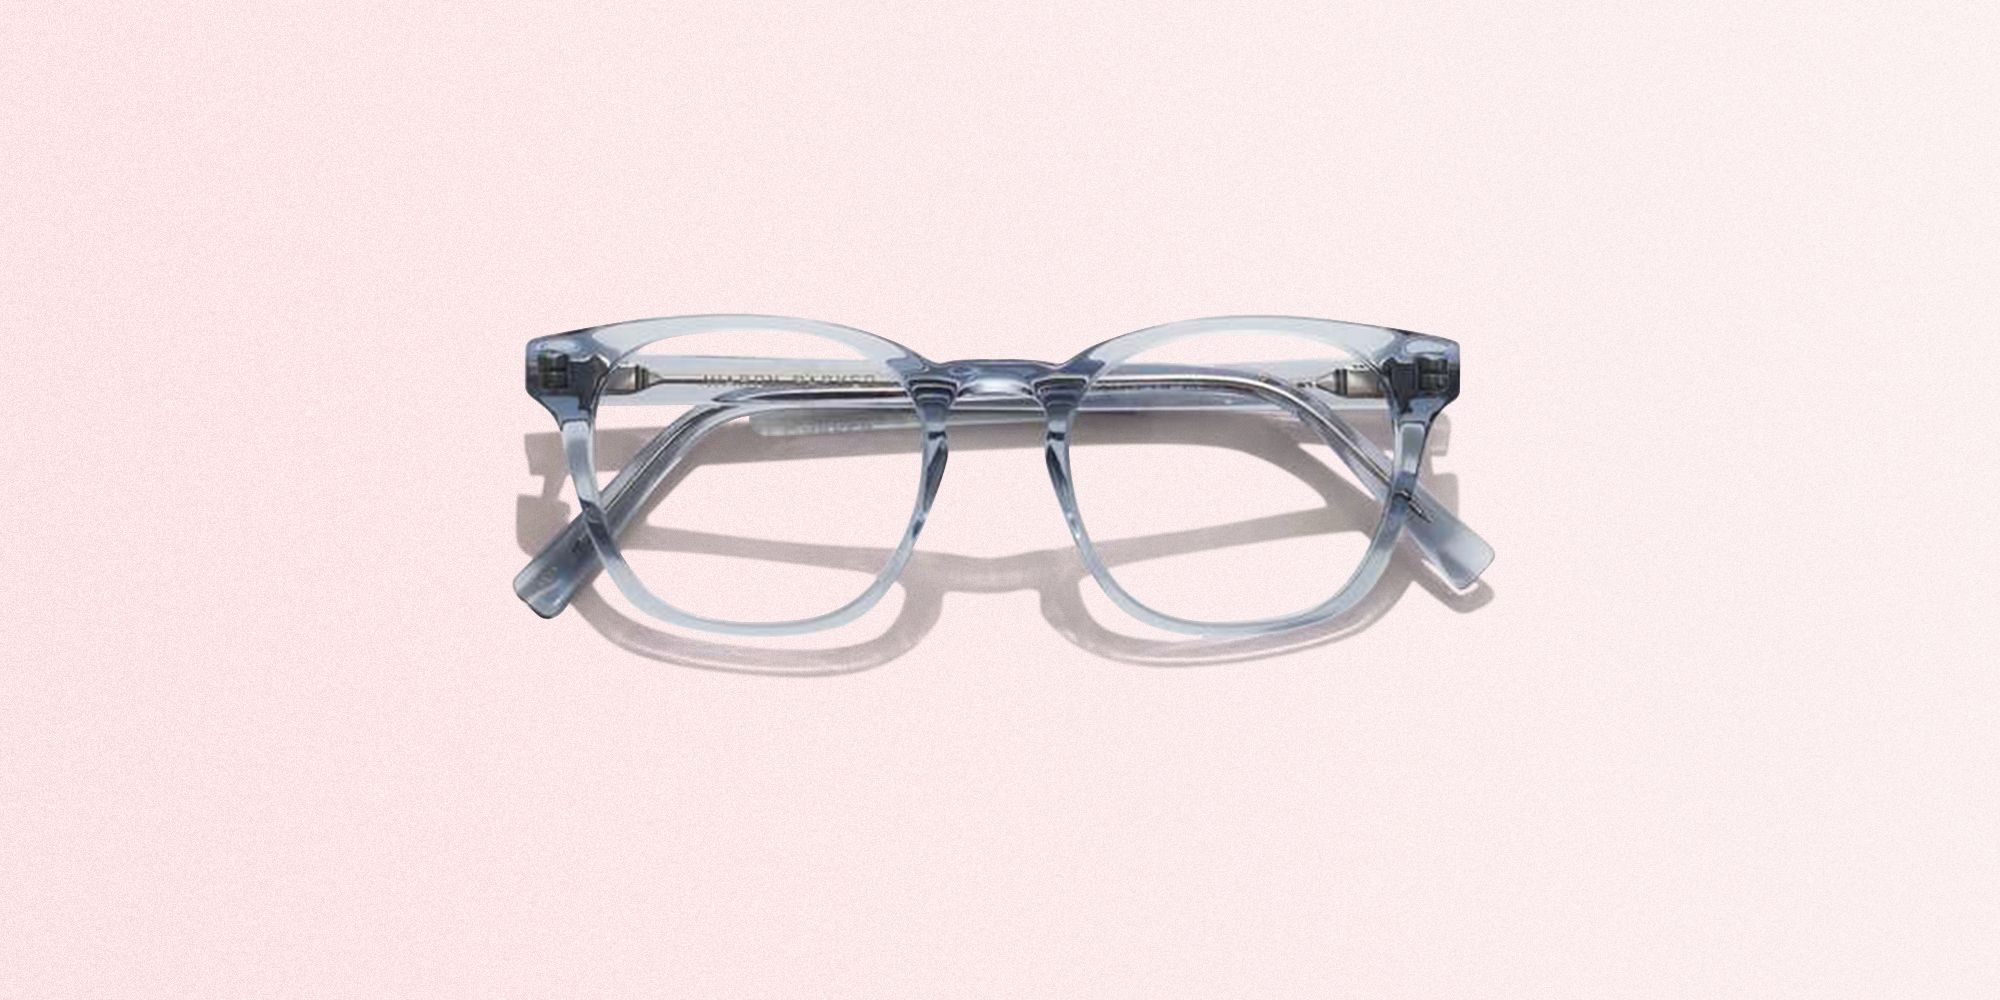 18 Best Websites To Buy Eyeglasses 2021 Where To Shop Men S Glasses Online